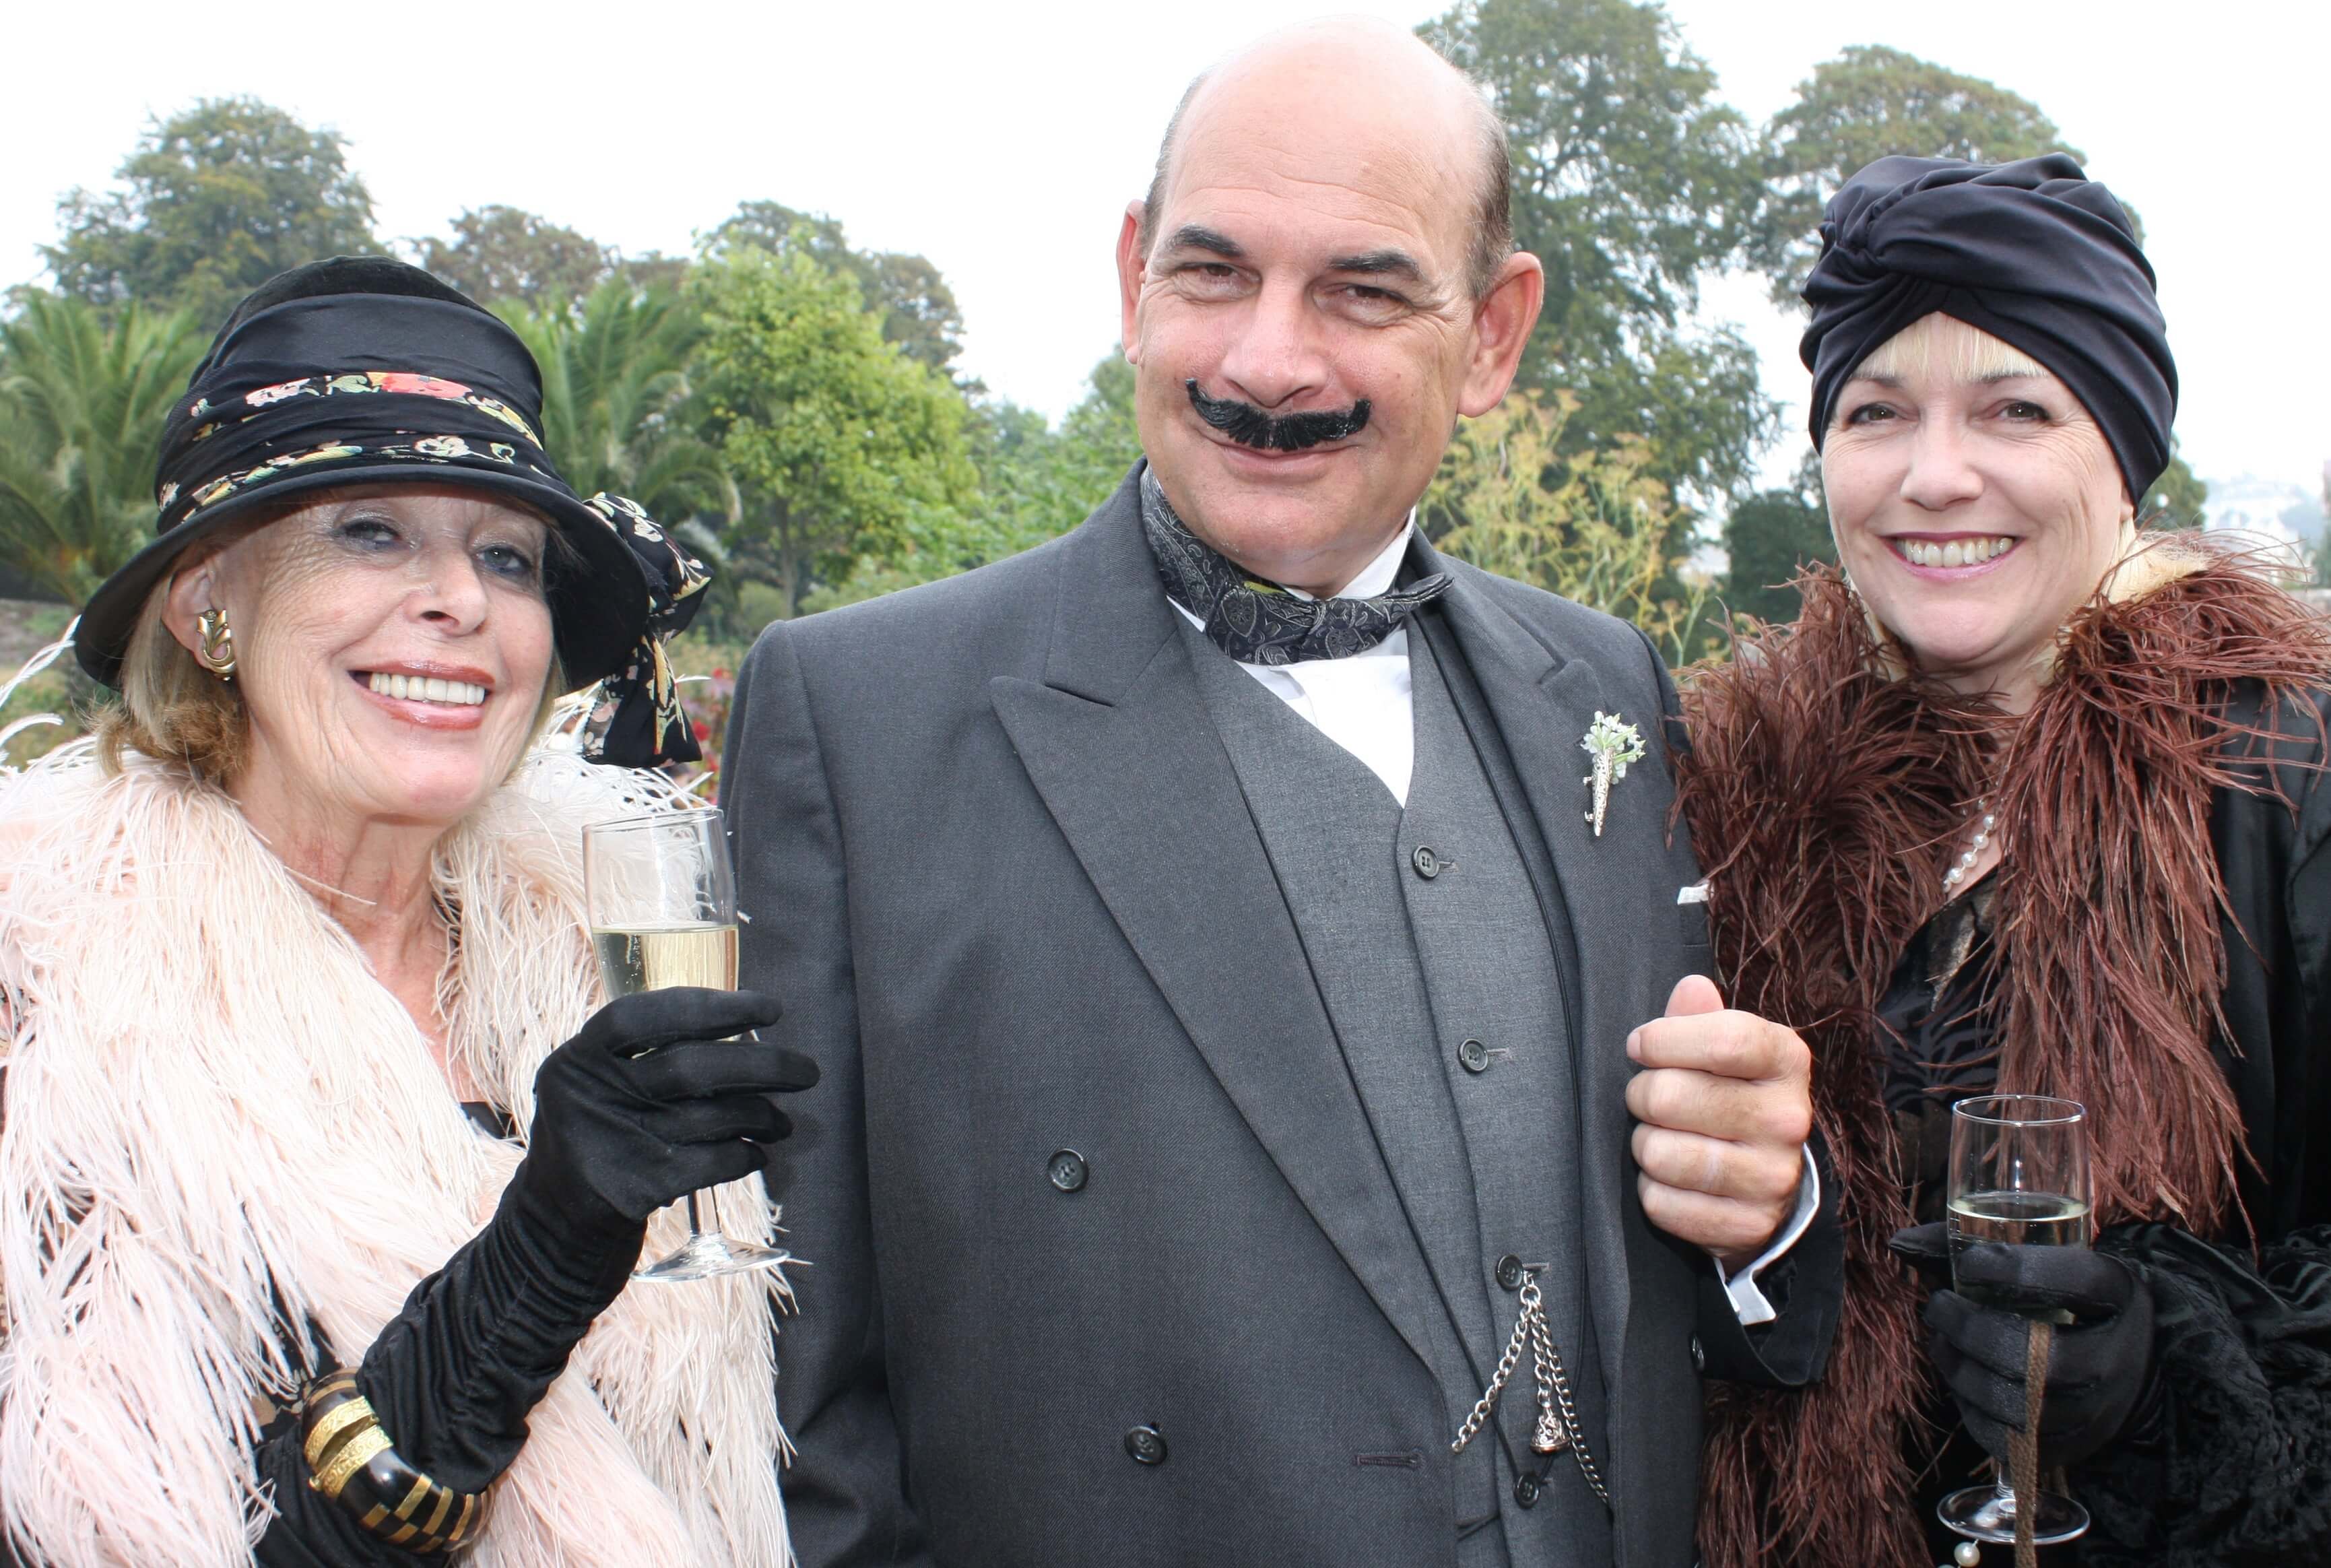 Hercule Poirot - detective created by Agatha Christie